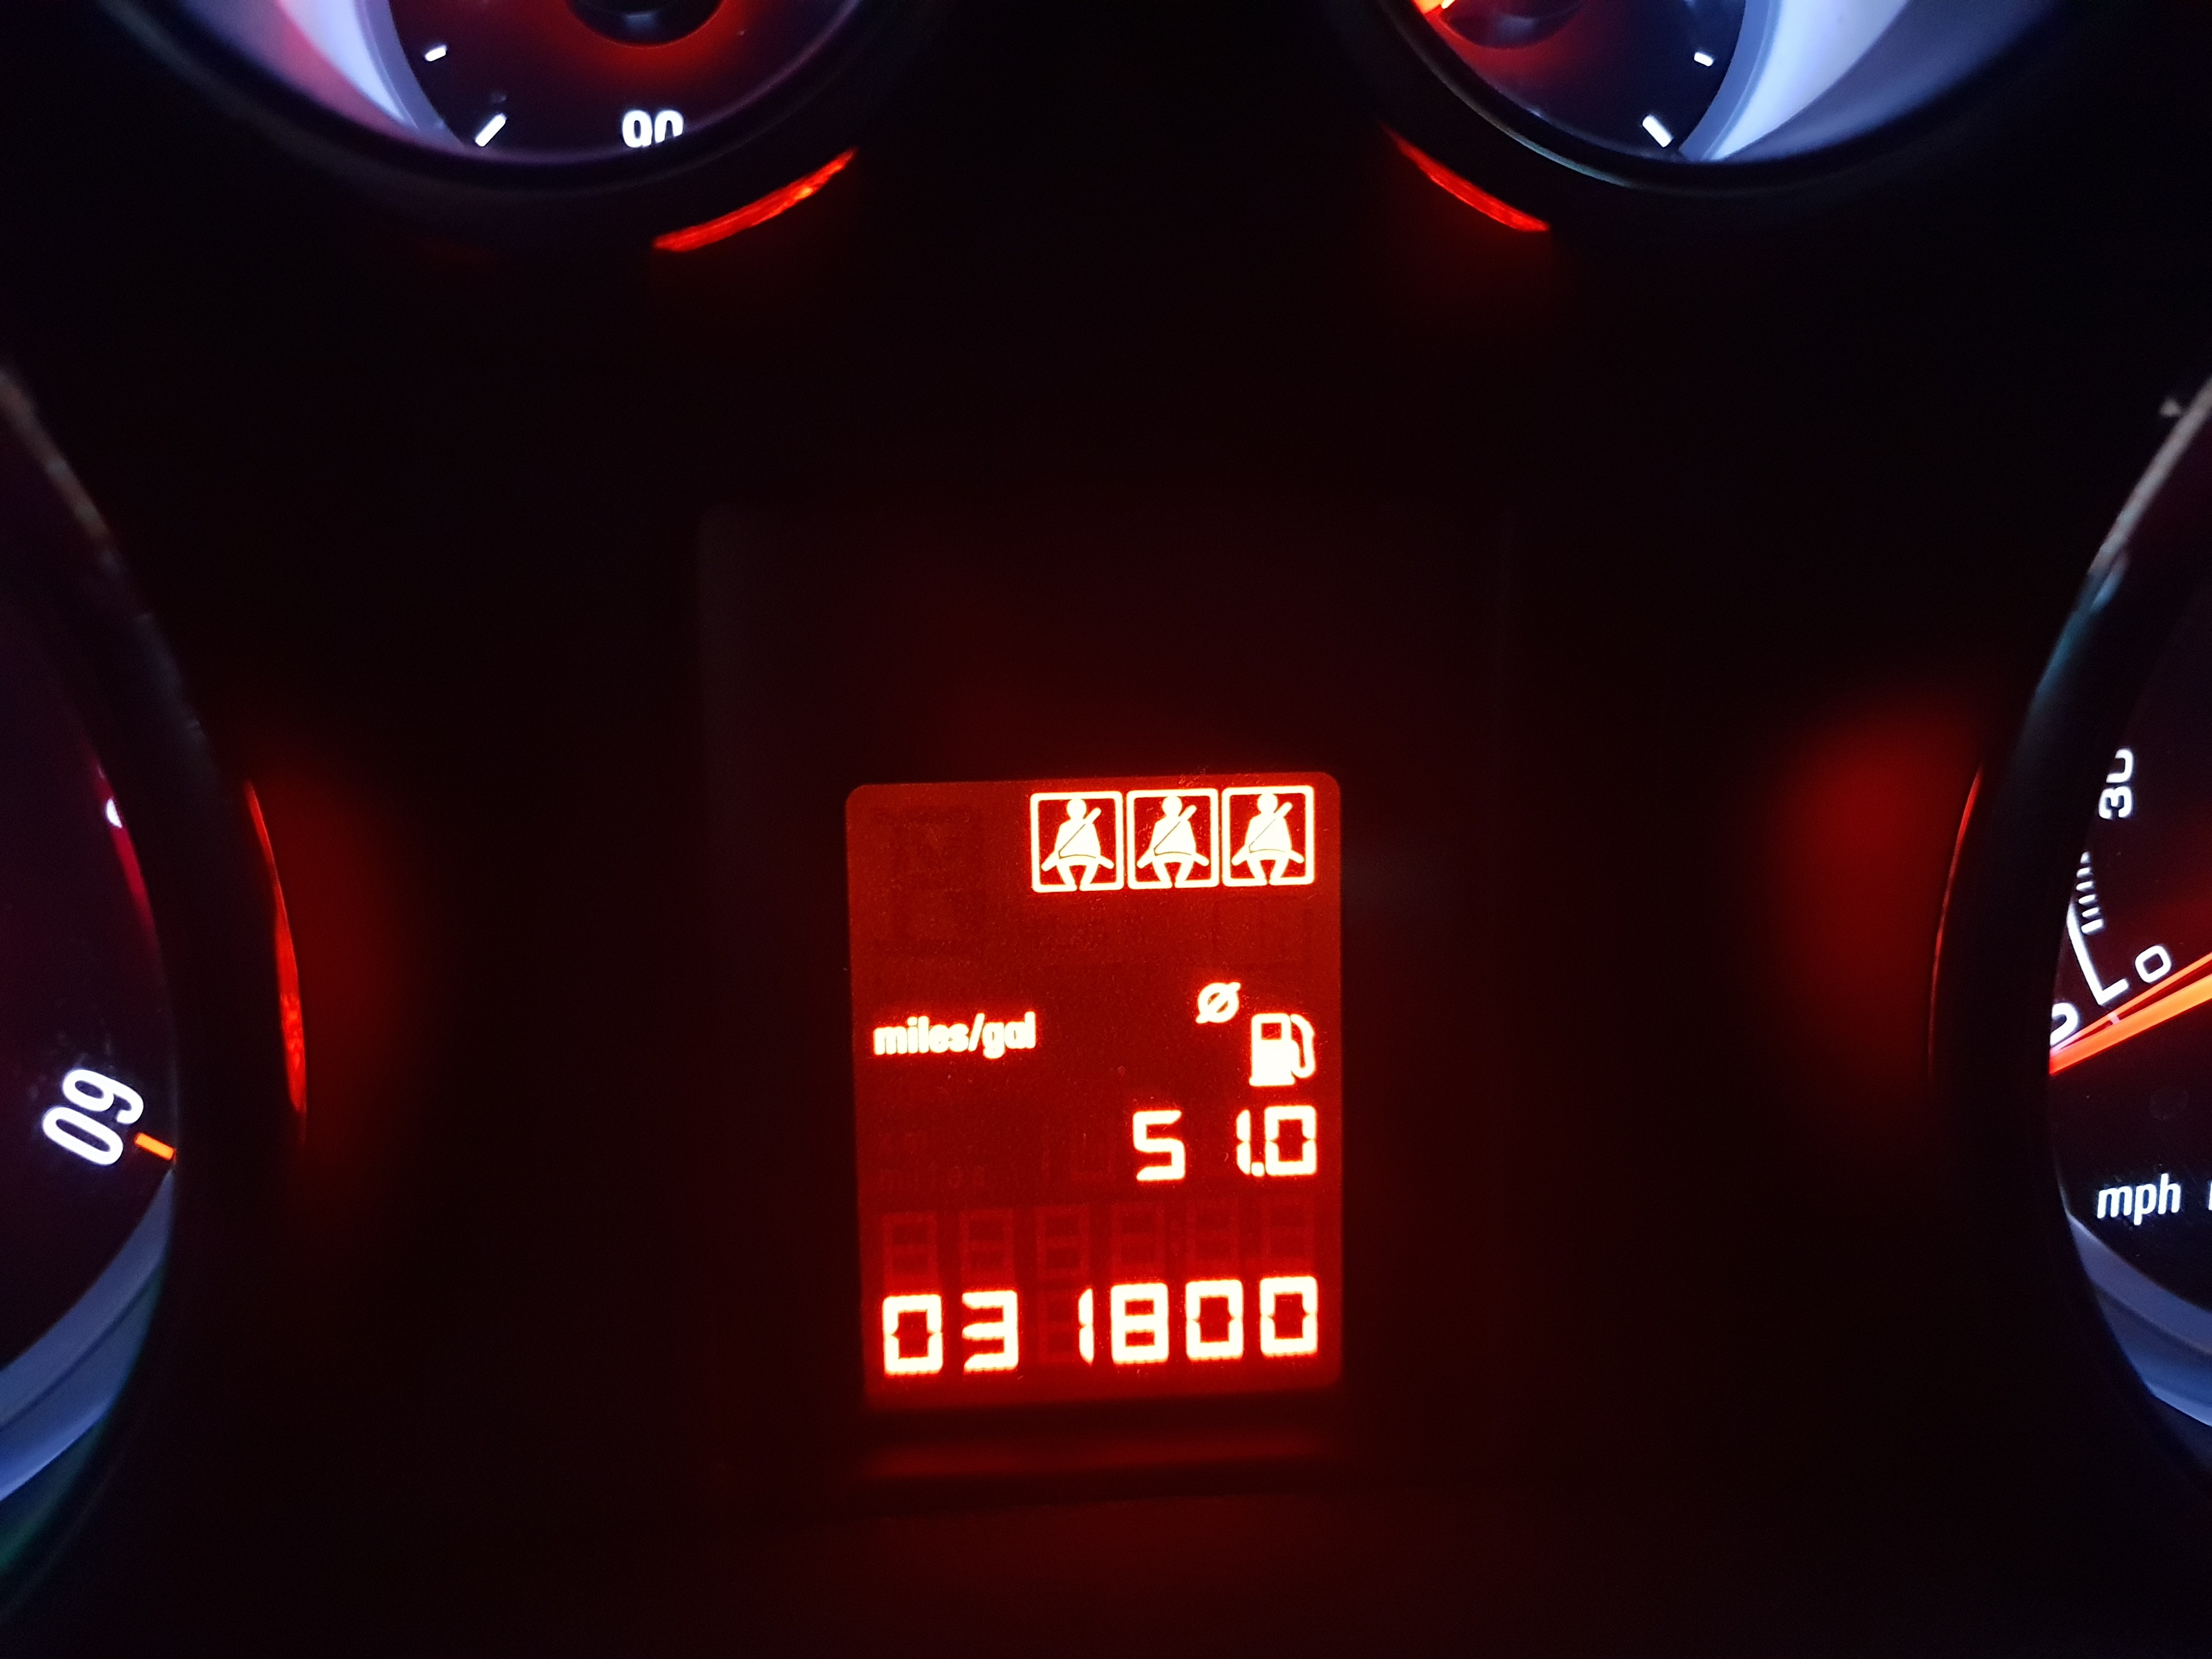 Car dashboard display showing miles/gal 51.0